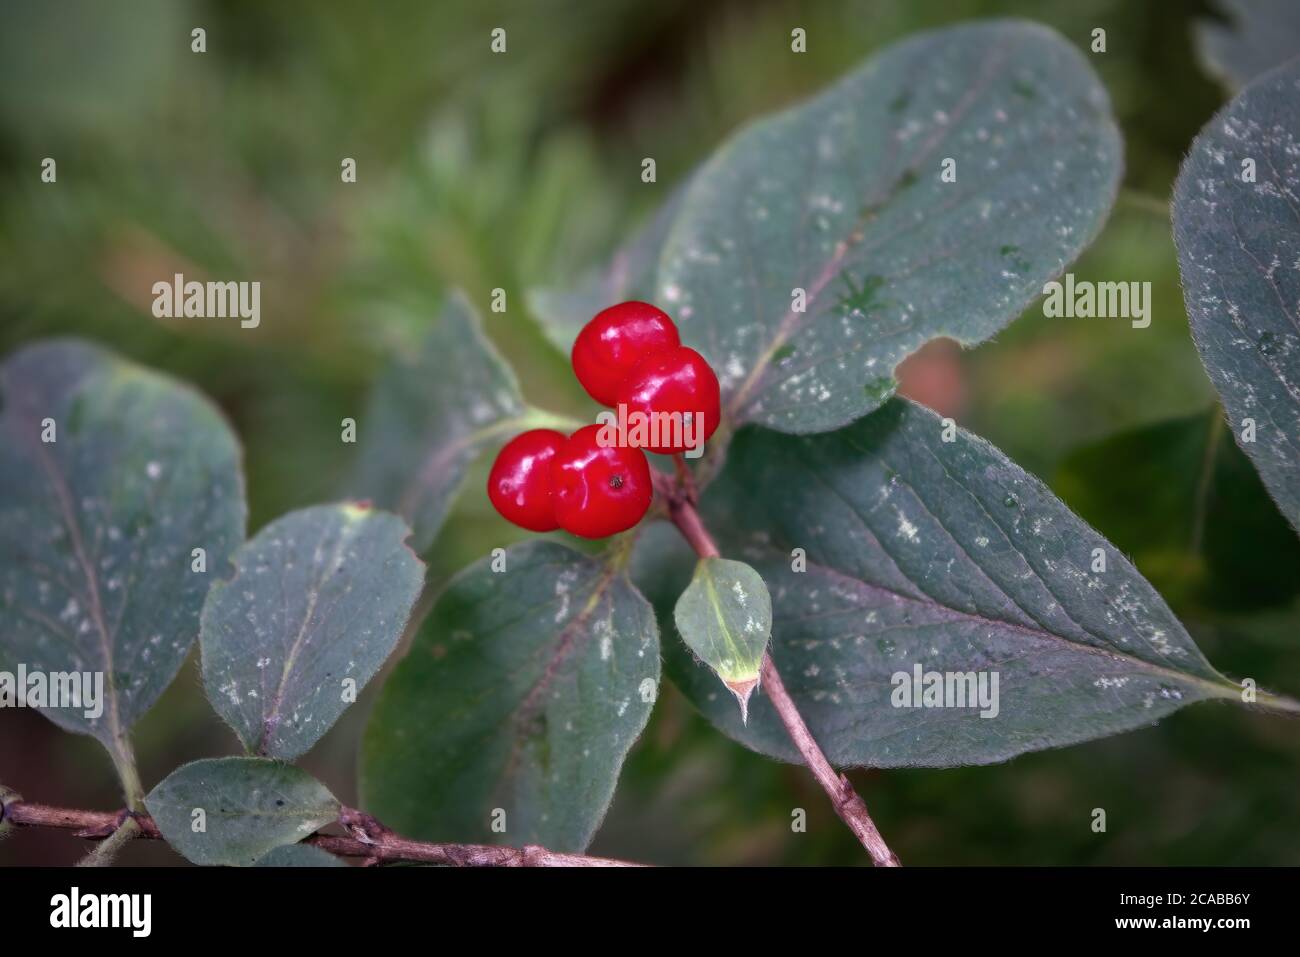 Branches of Frangula alnus with red berries. Fruits of Frangula alnus. Stock Photo